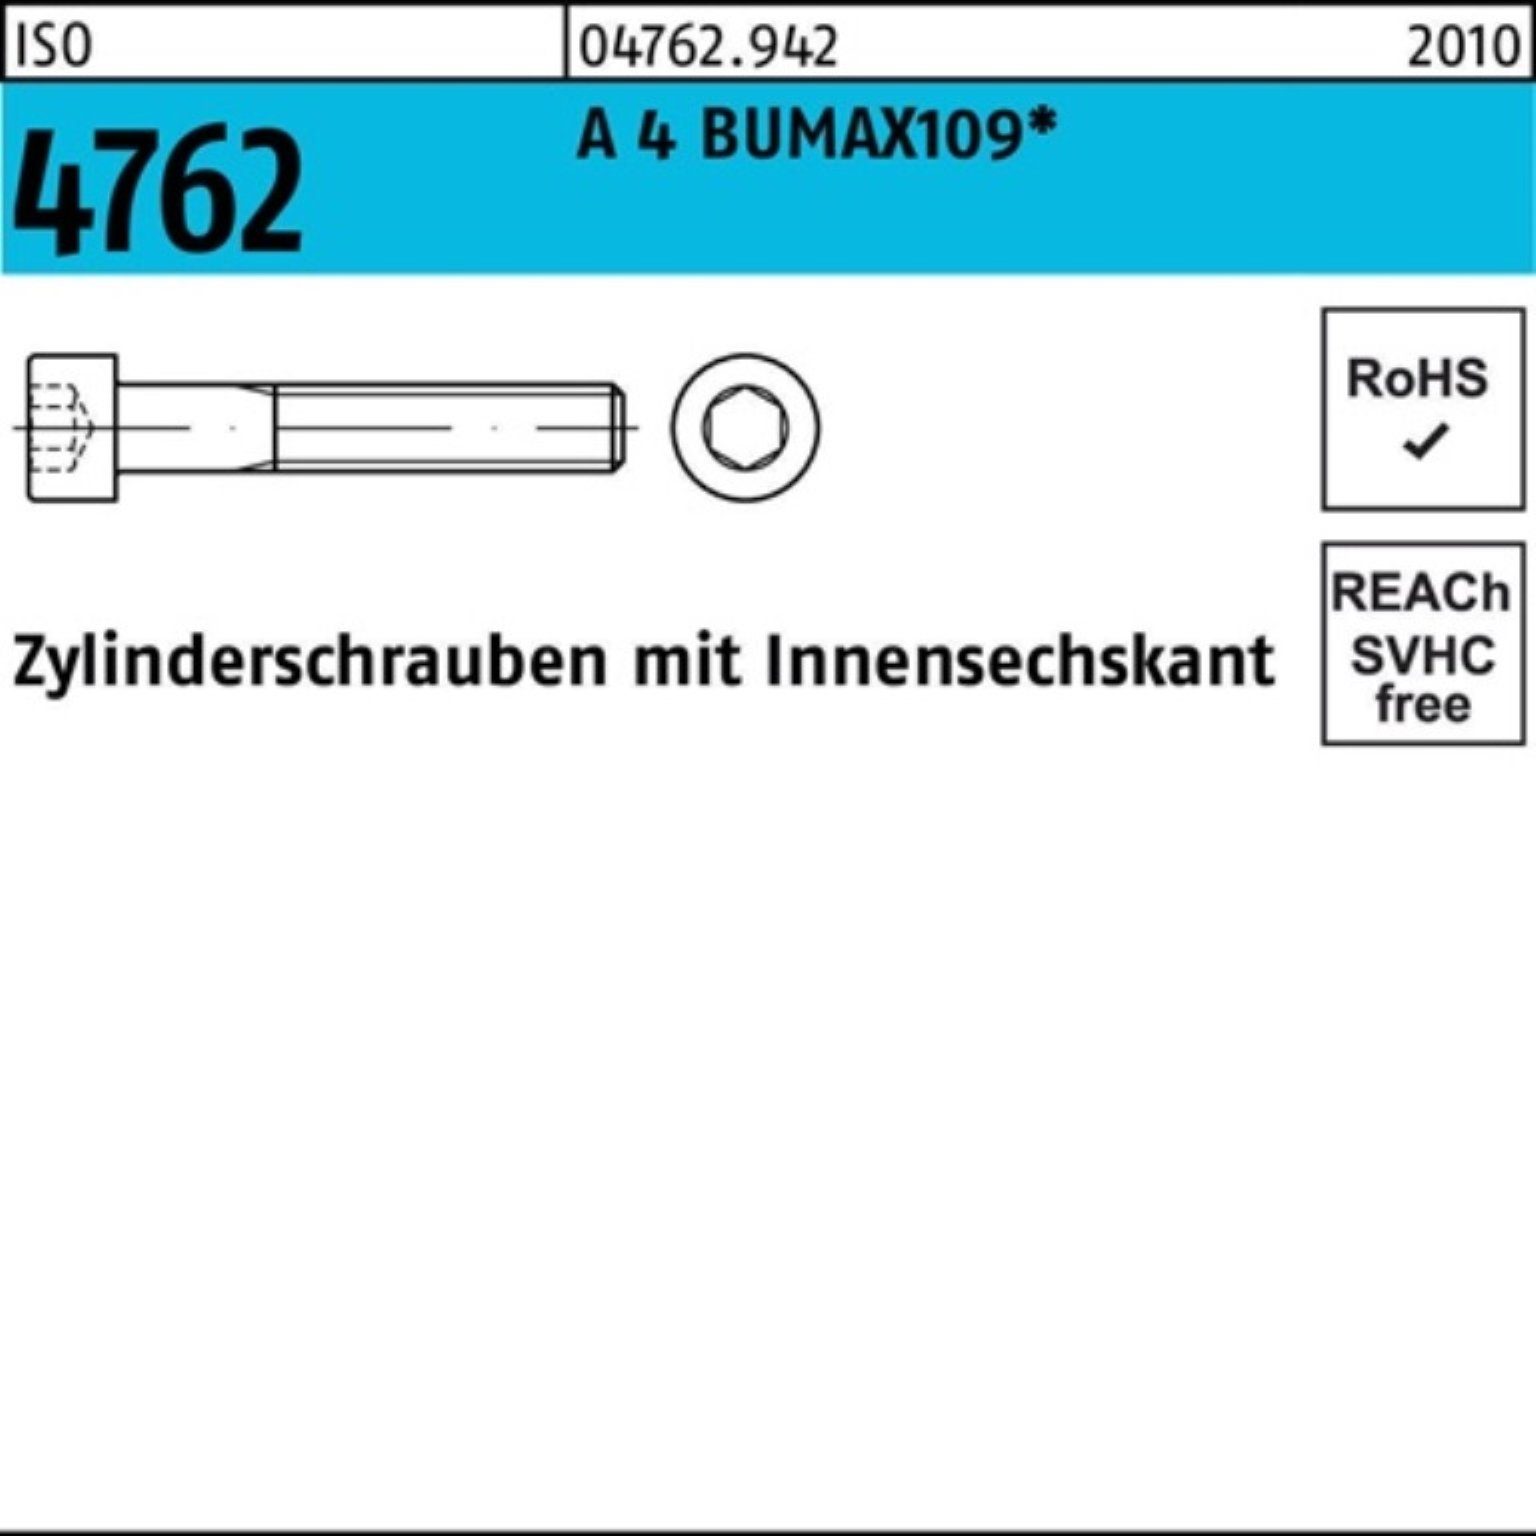 Bufab Zylinderschraube 100er Pack A 4762 Innen-6kt 4 Zylinderschraube ISO 20 M6x BUMAX109 100